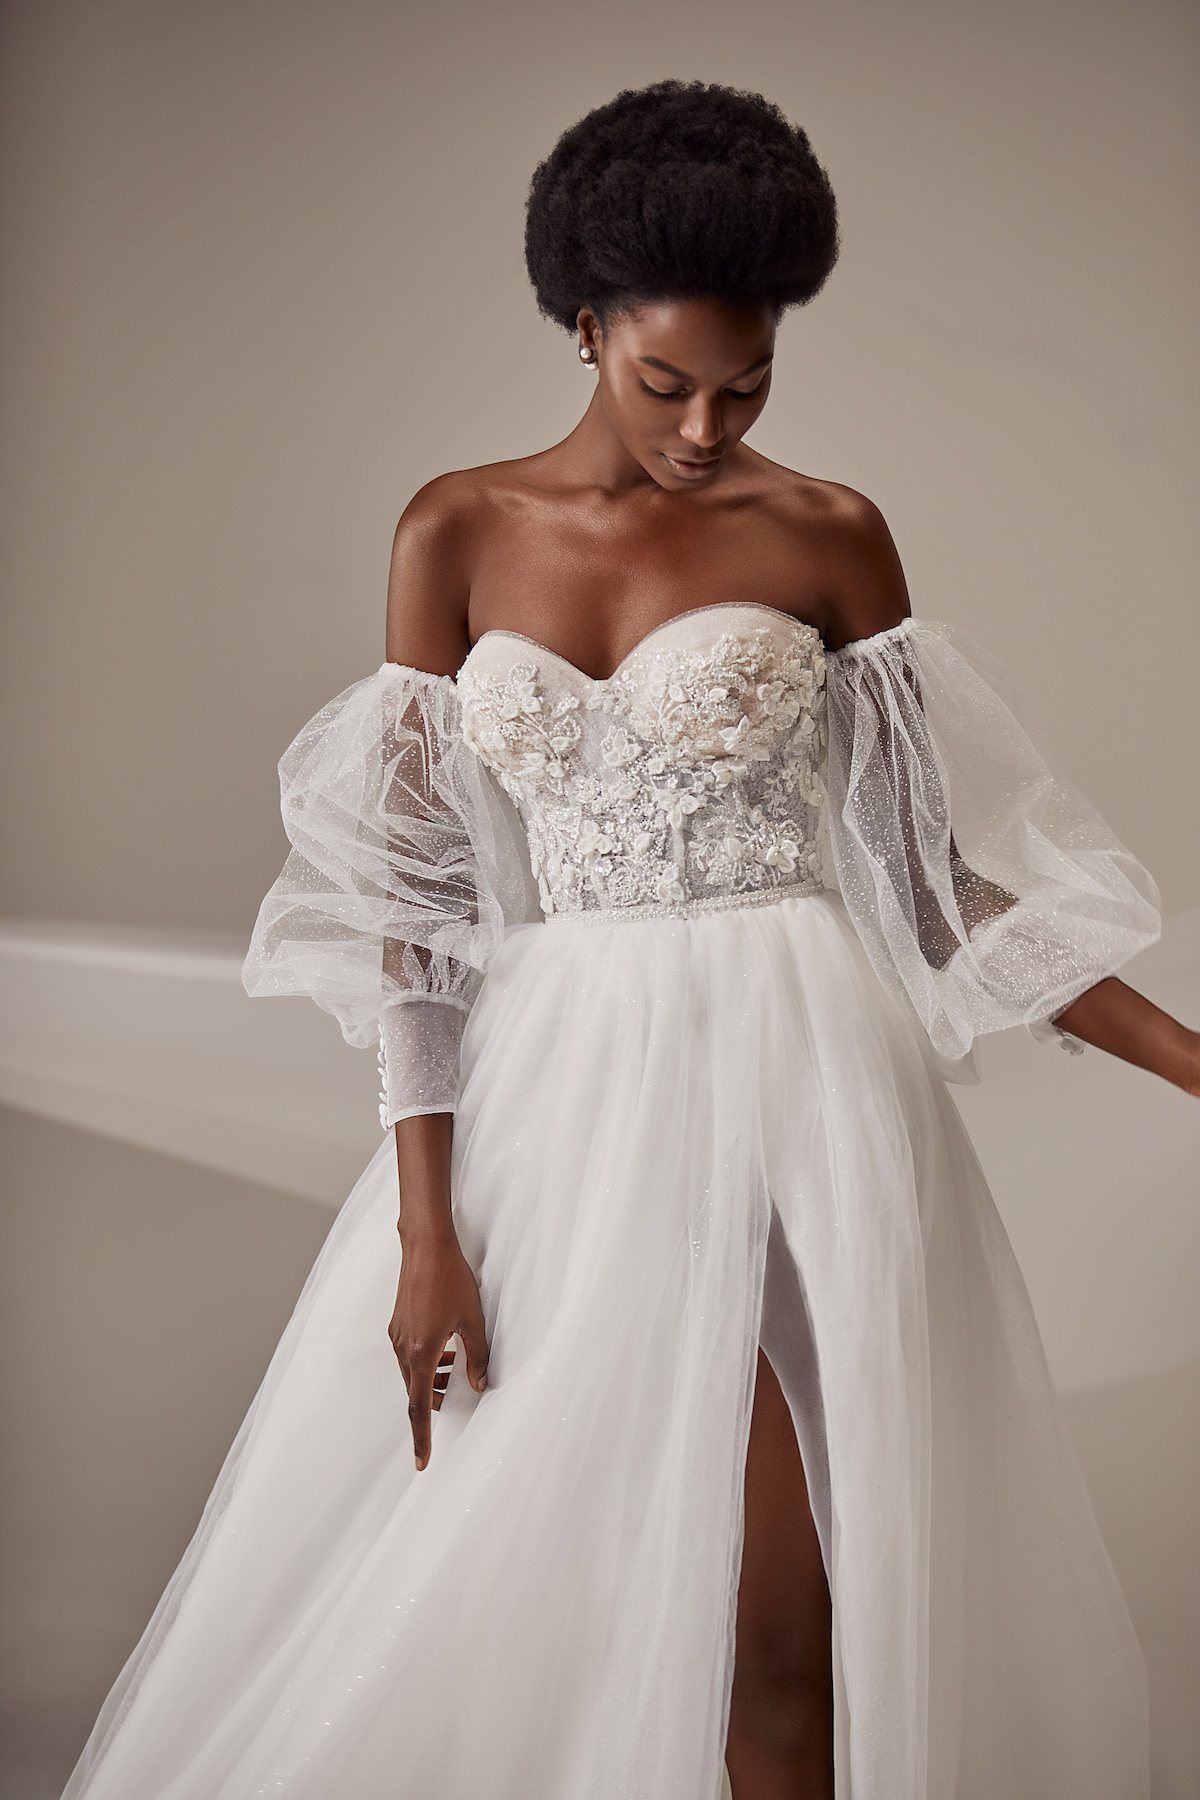 Dream Wedding Dress by Milla Nova - Charly white lace